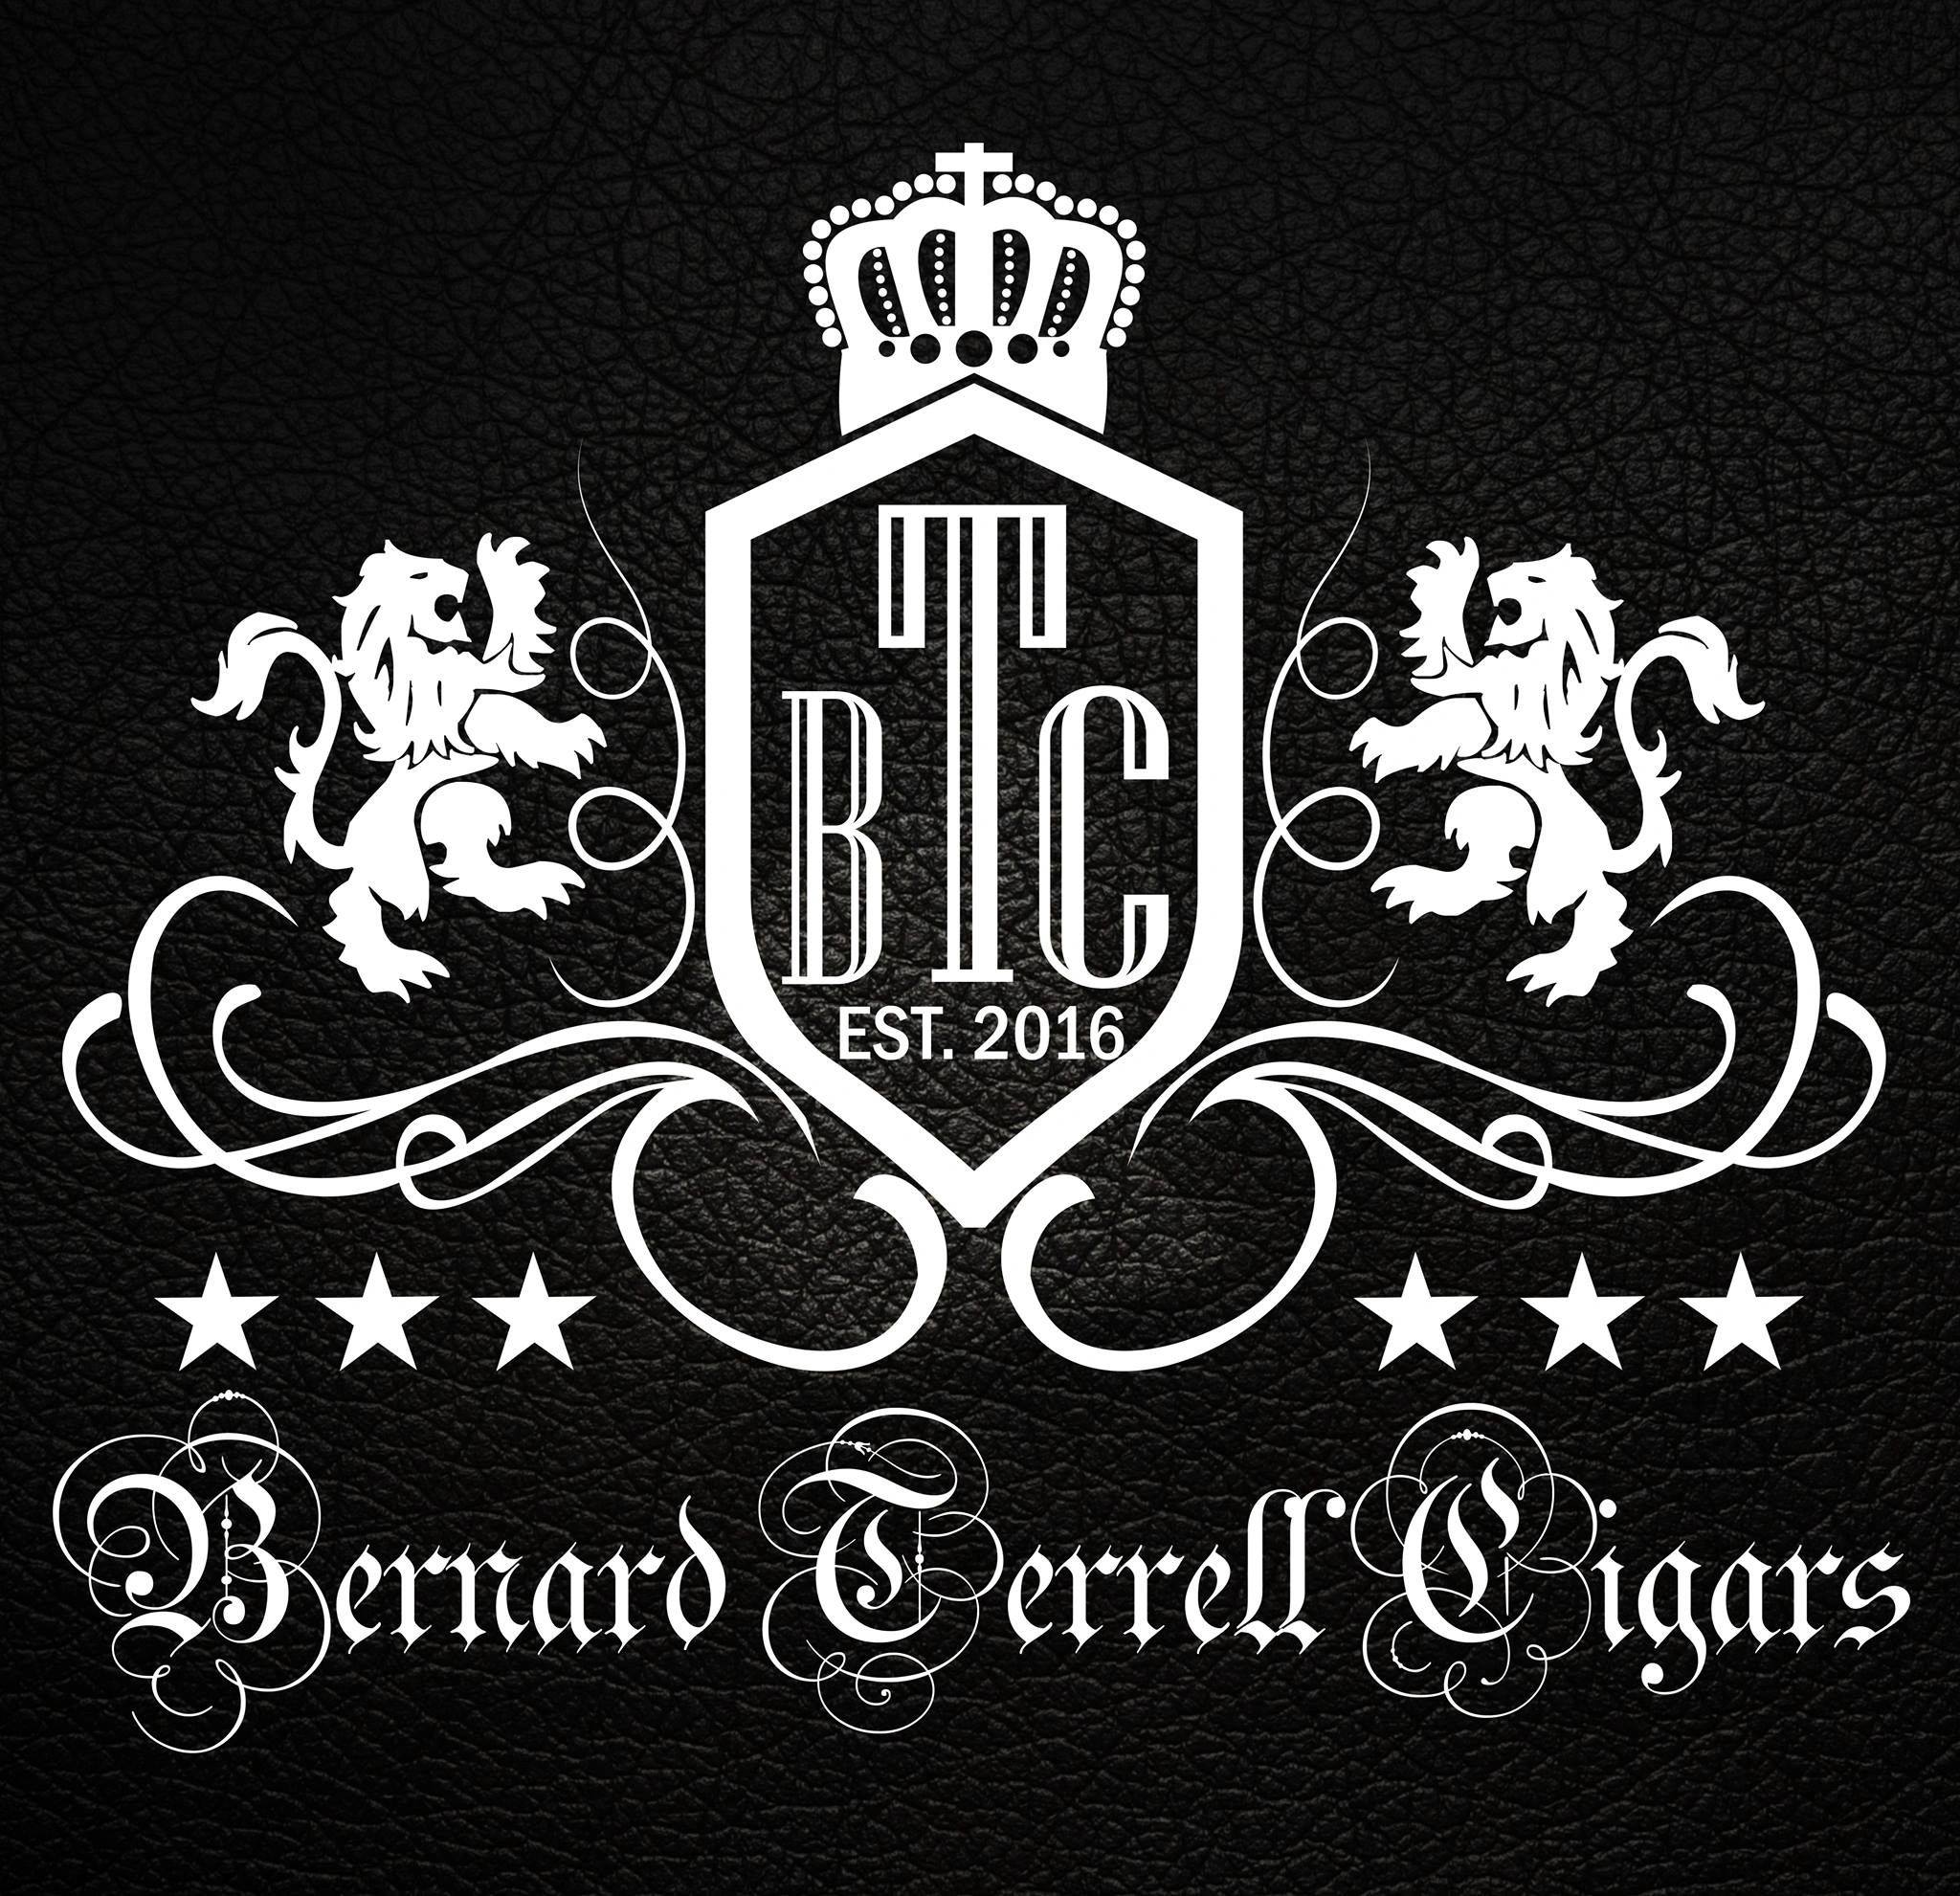 Bernard Terrell Cigars - Black Owned